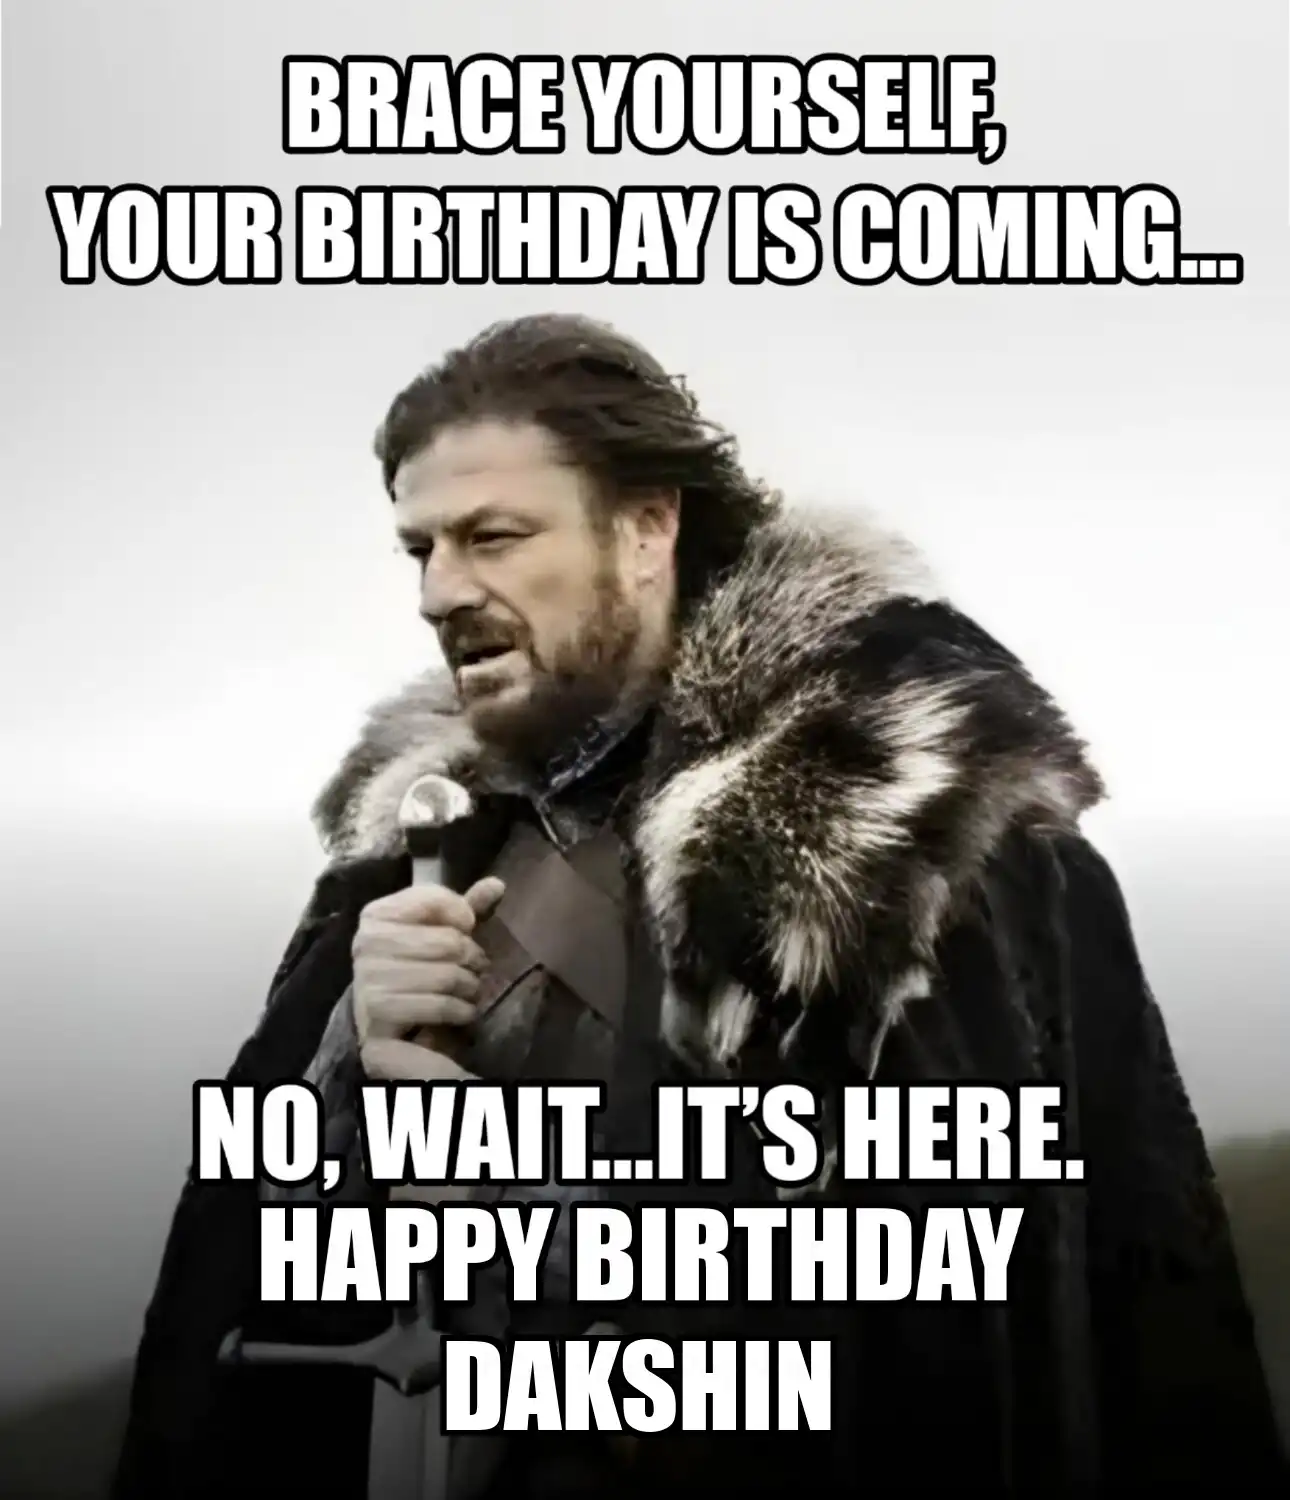 Happy Birthday Dakshin Brace Yourself Your Birthday Is Coming Meme